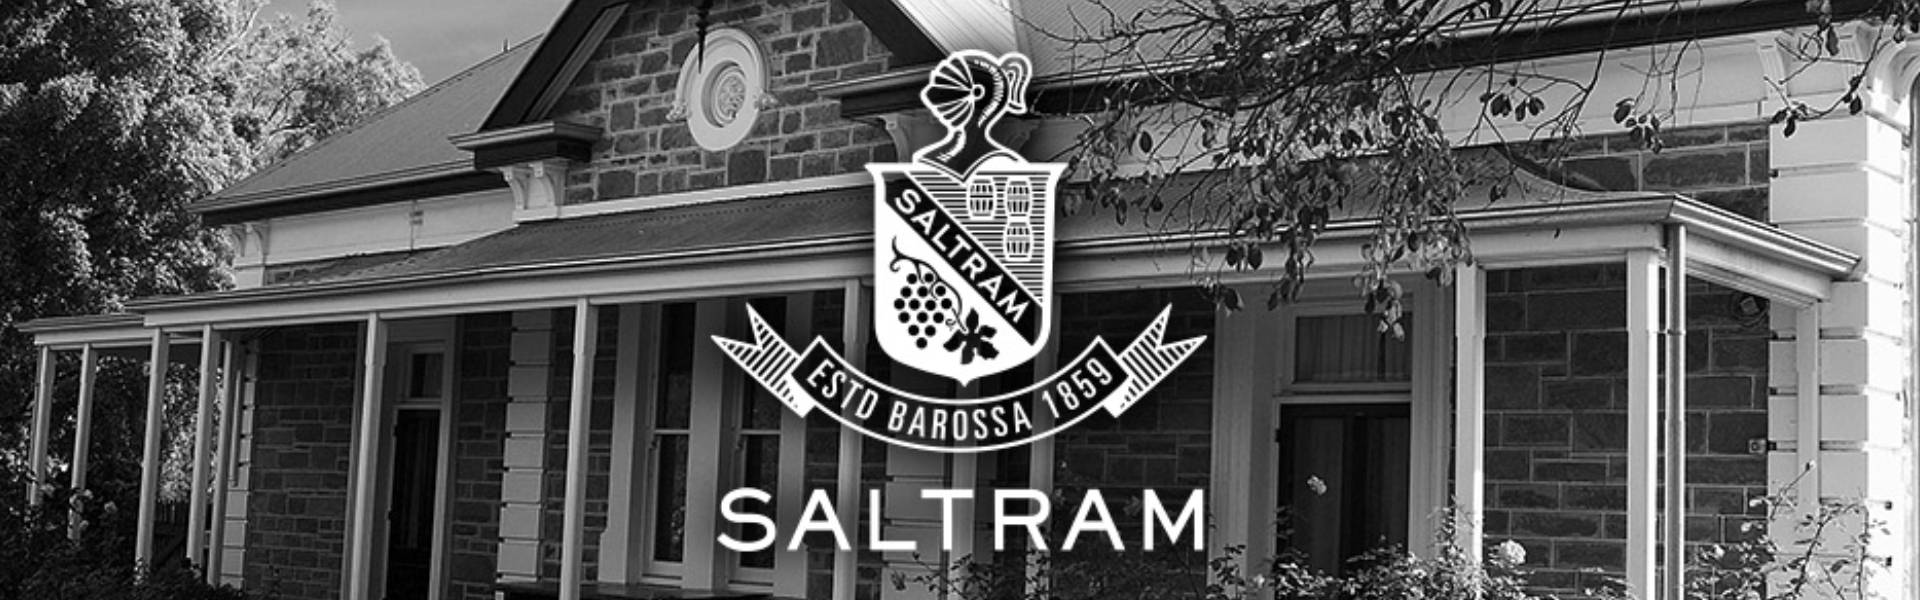 Saltram, a celebrated history